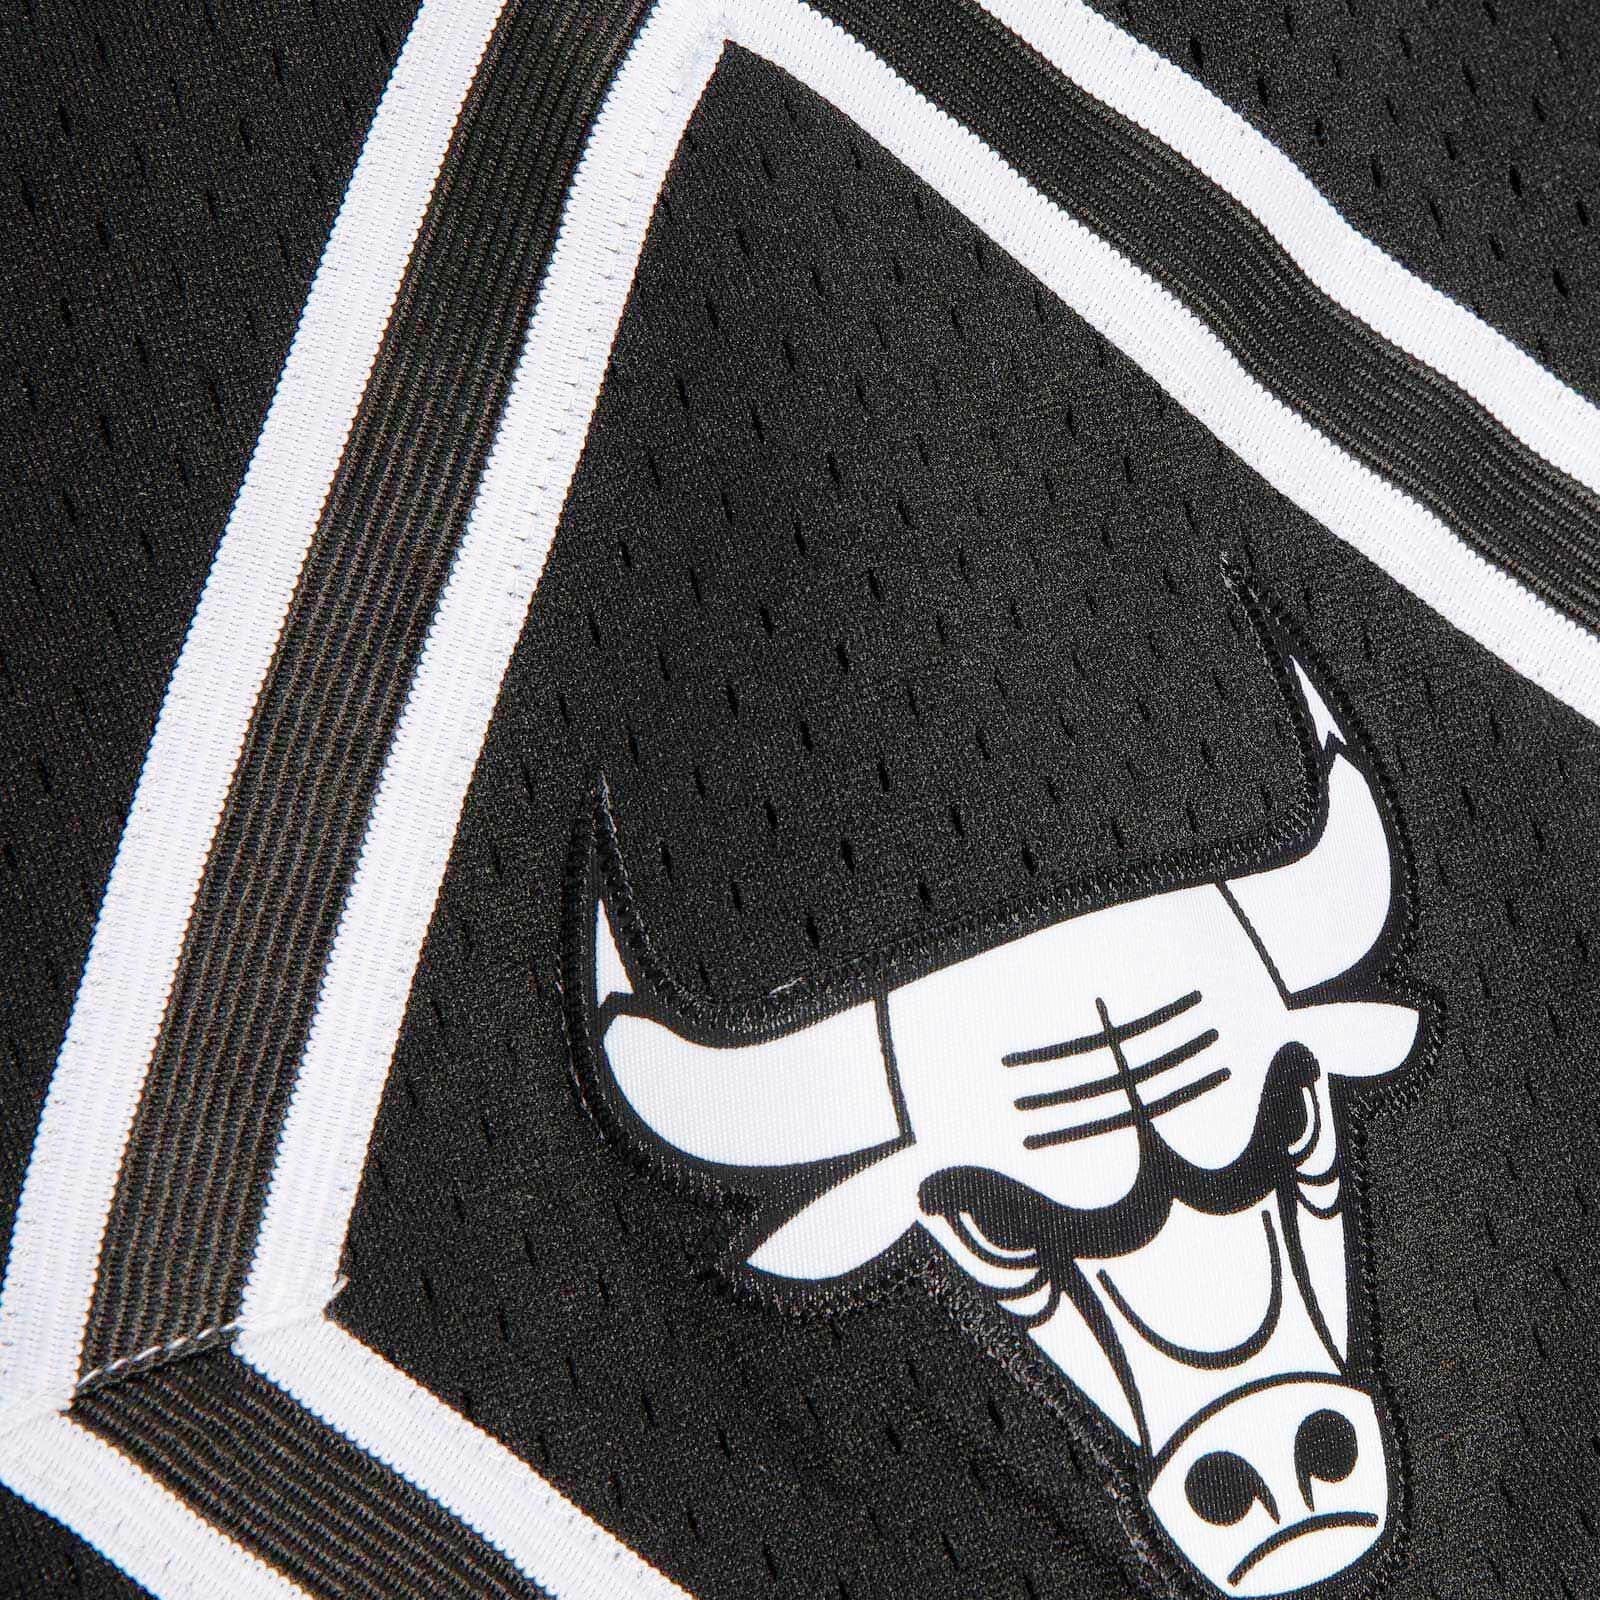 Mitchell & Ness Chicago Bulls Swingman shorts in black